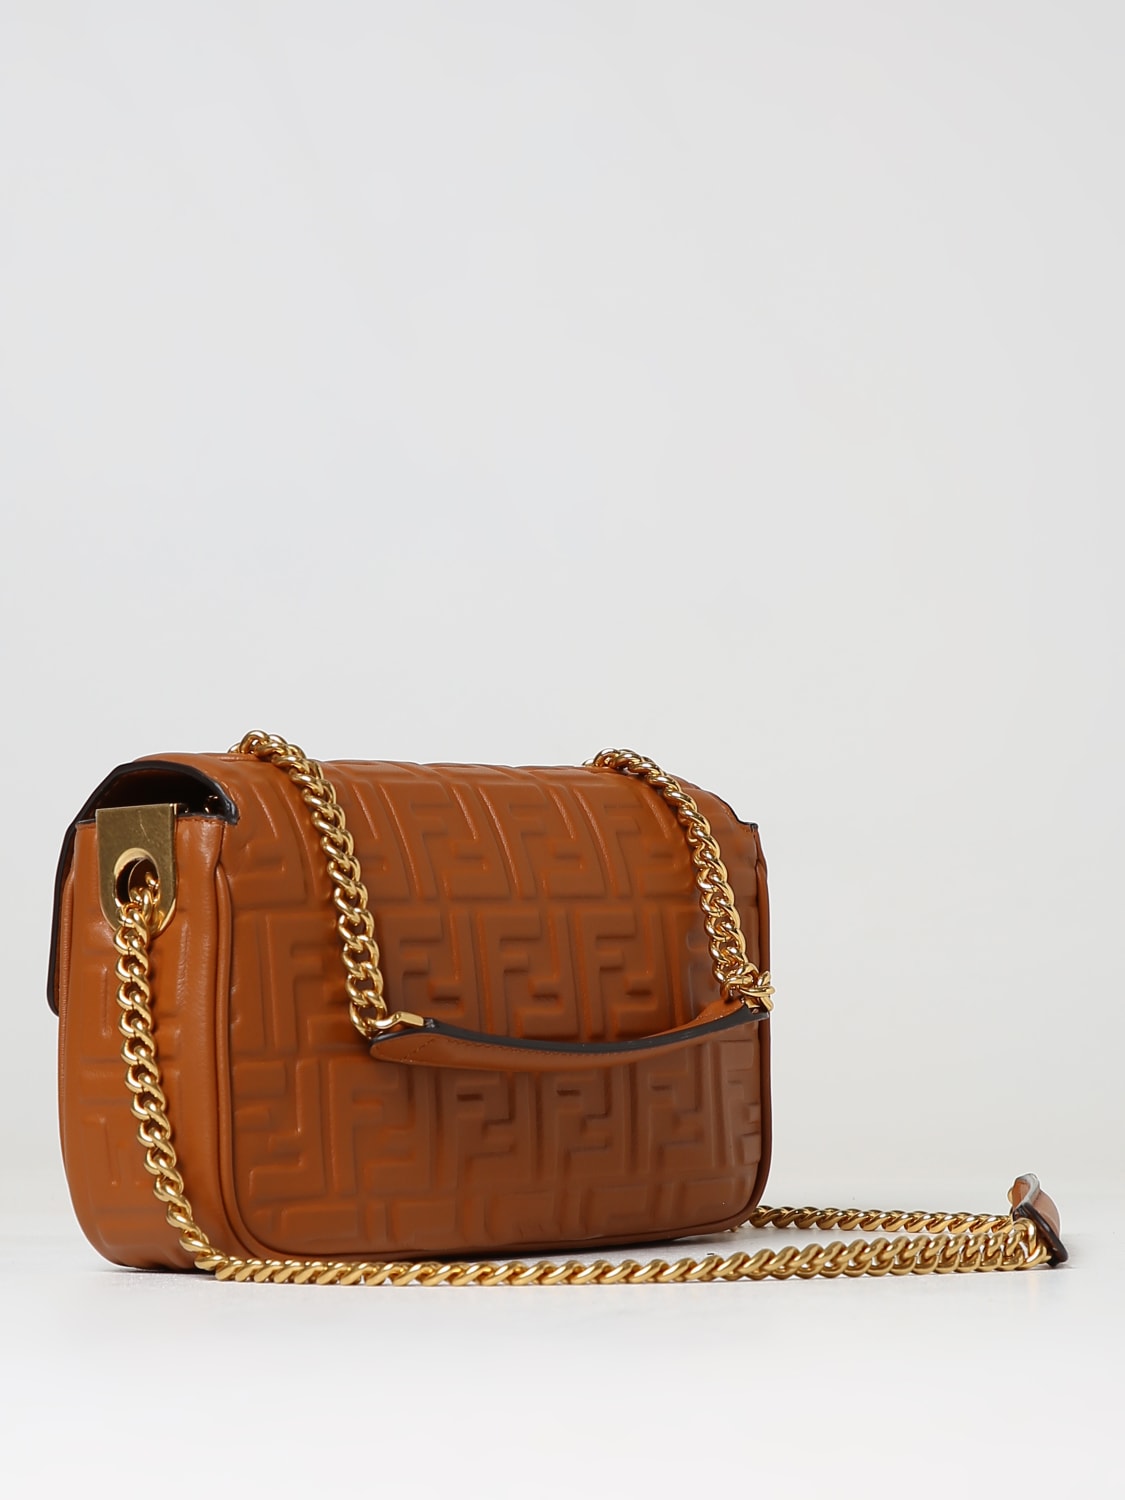 Fendi Baguette Leather Chain Shoulder Bag